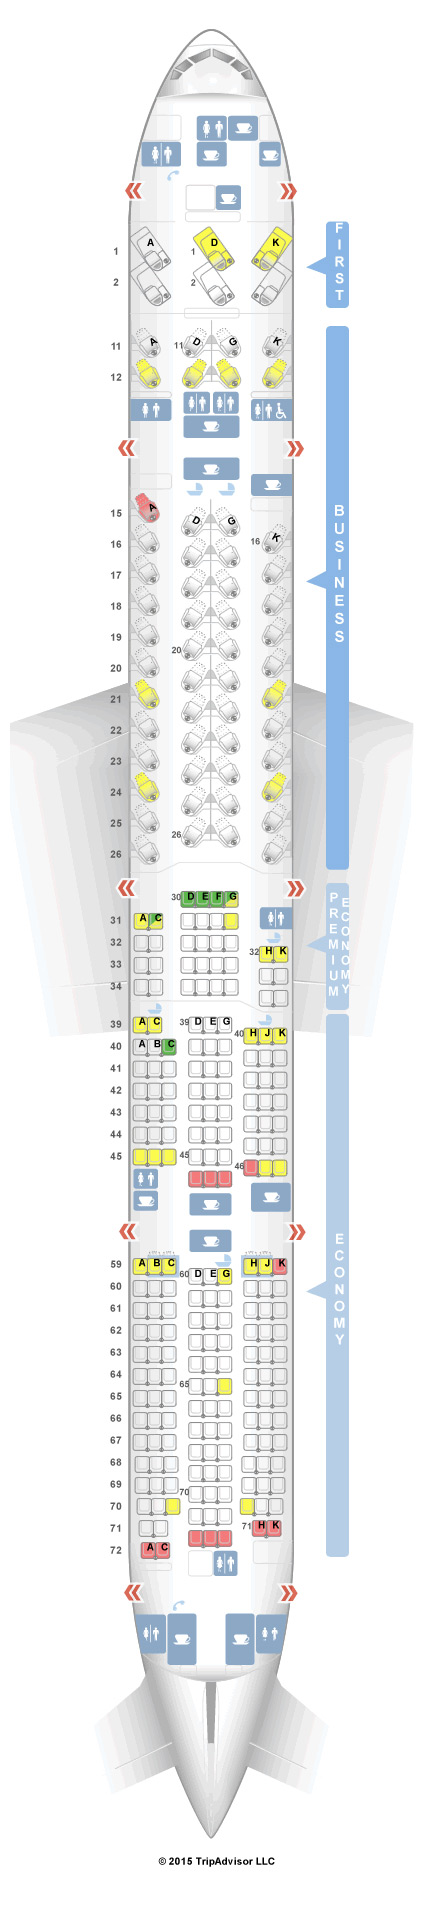 777 300er Seating Chart